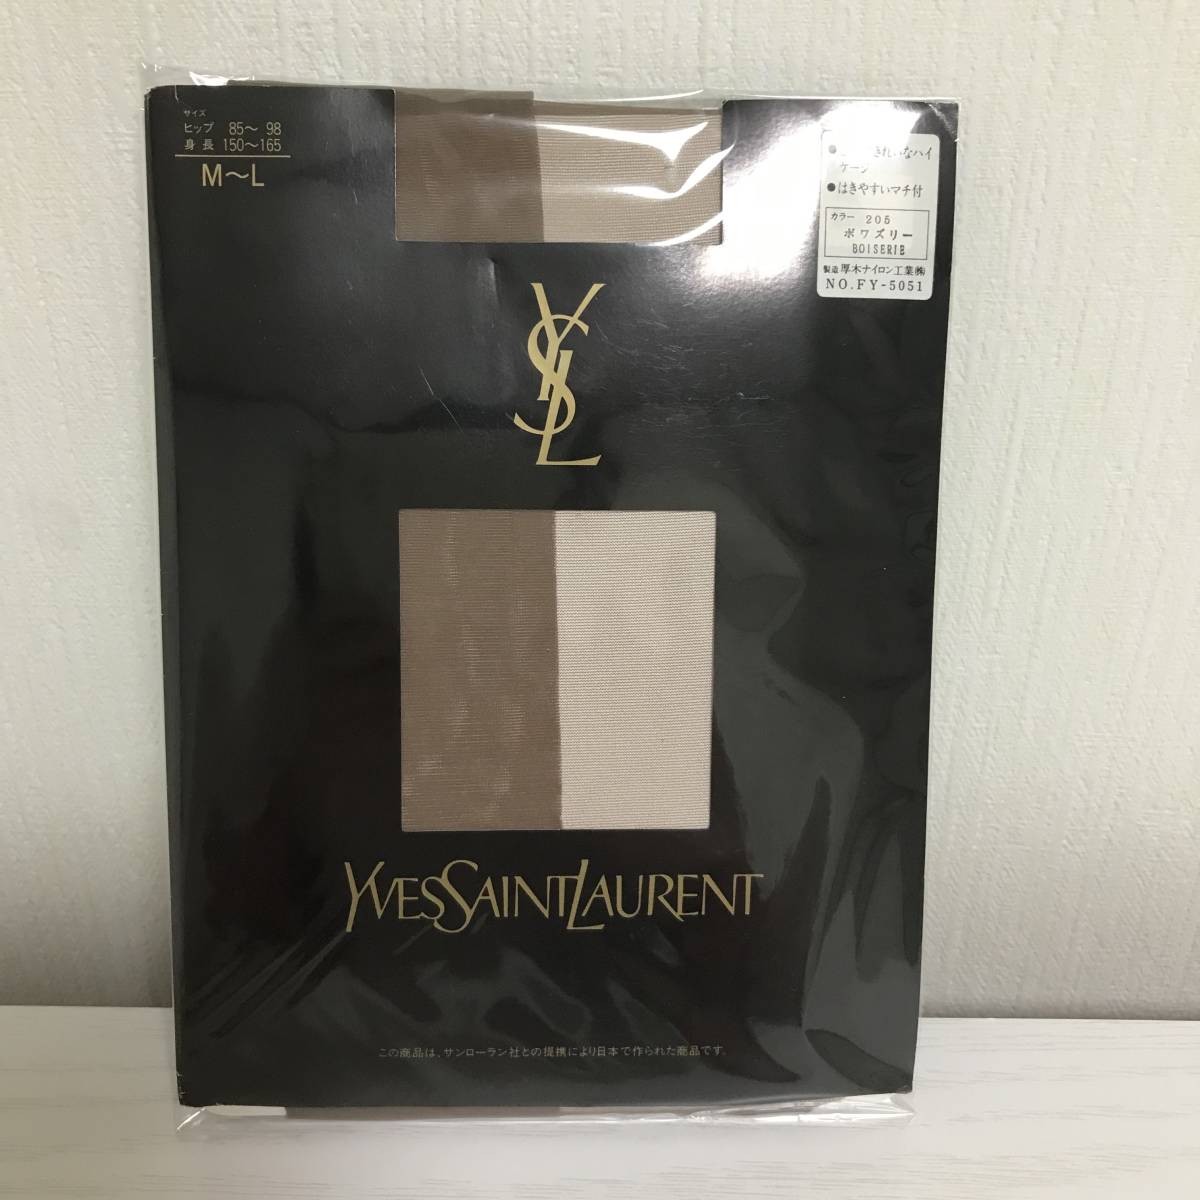  unused #Yves Saint Laurent* Yves Saint-Laurent * Eve sun rolan # bread ti stockings #bowaz Lee # made in Japan # lady's #M~L